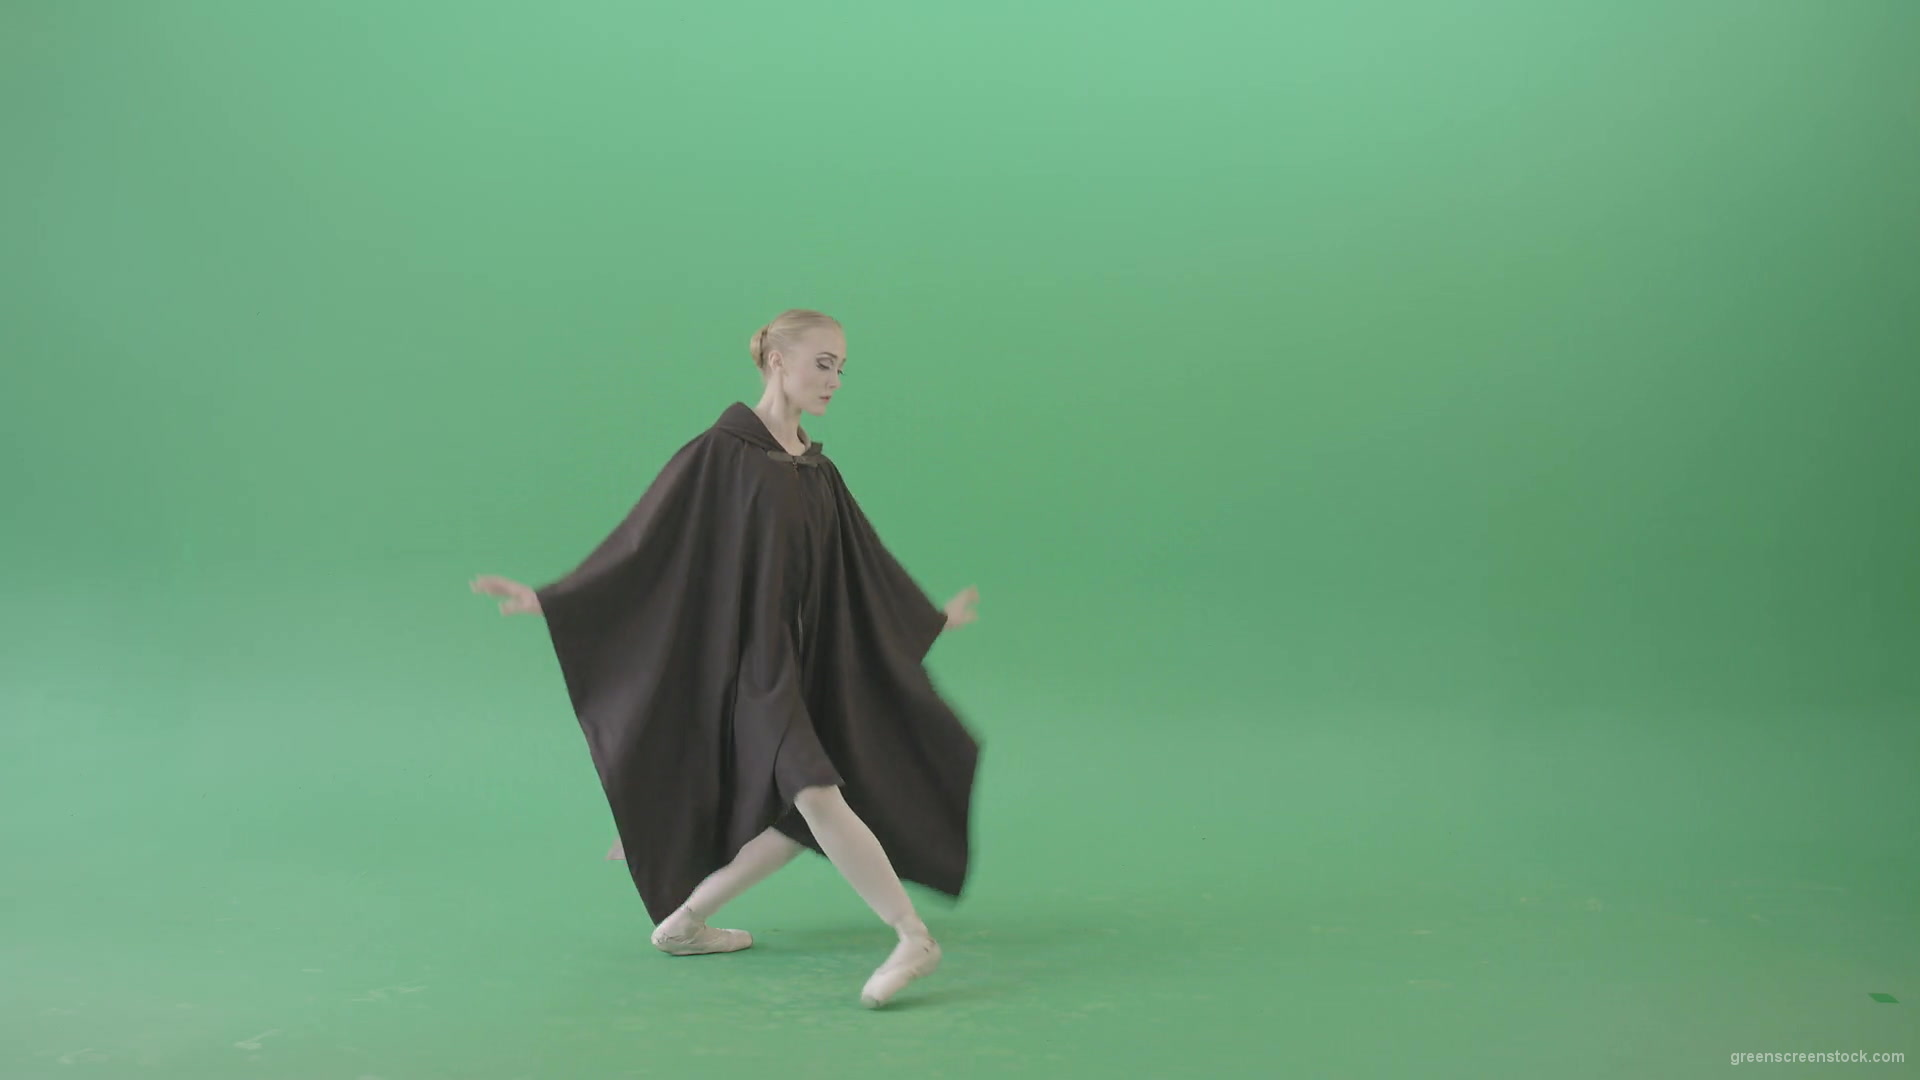 Green-Screen-Ballet-Girl-spinning-in-black-Mantle-cloak-4K-Video-Footage-1920_008 Green Screen Stock